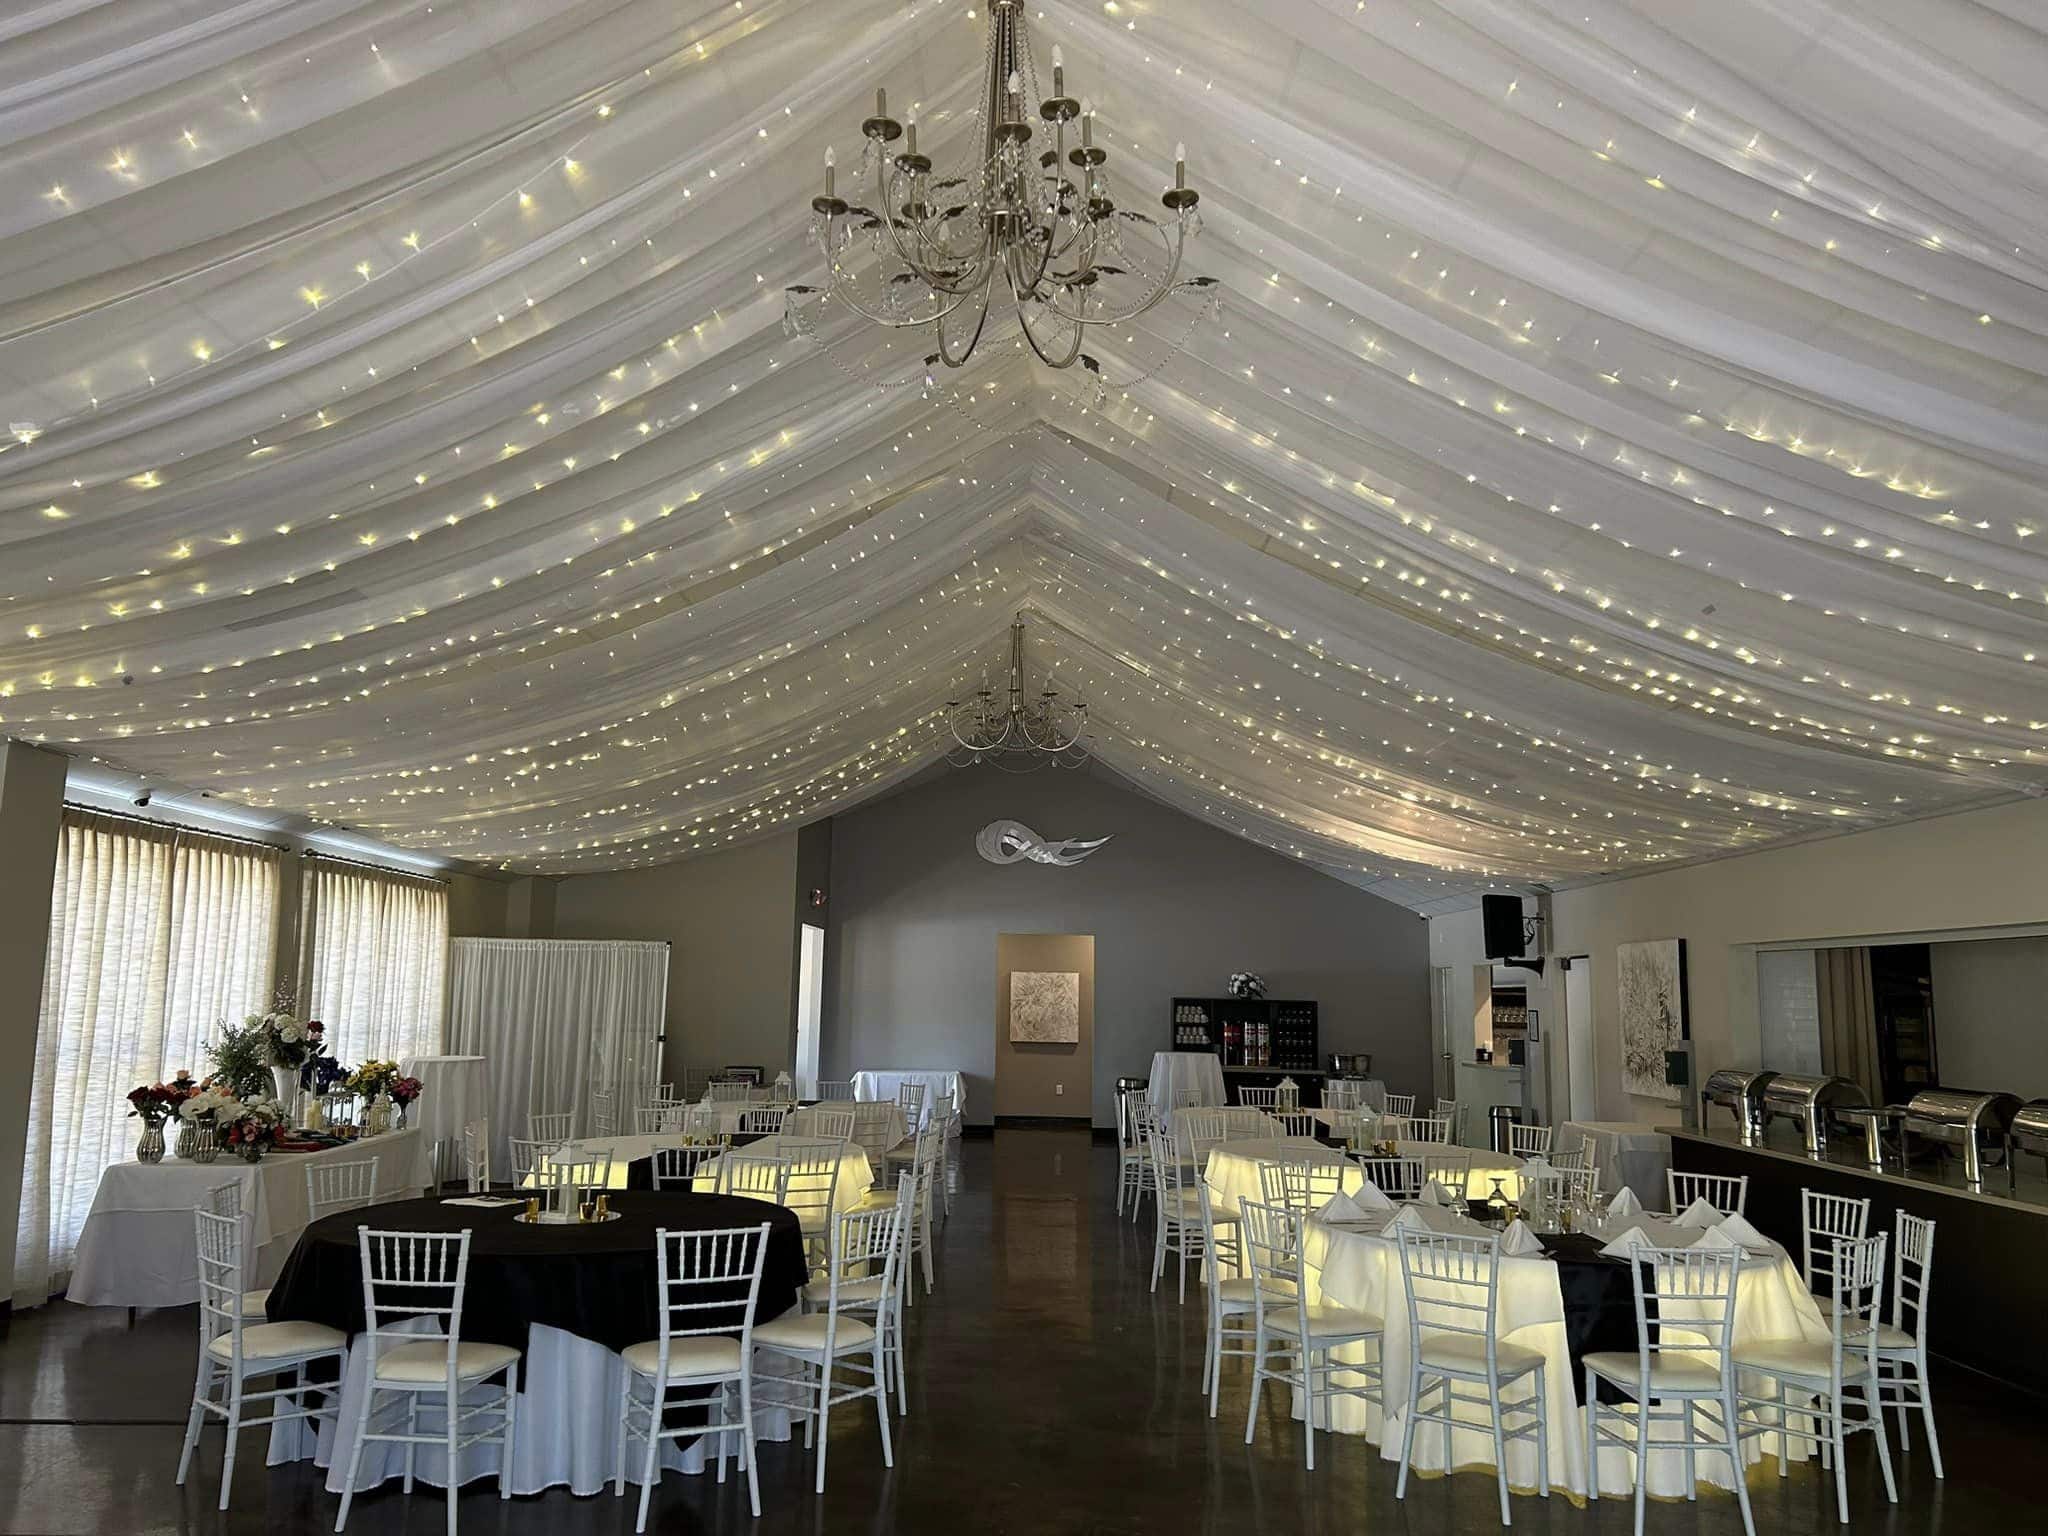 The Oaks Wedding & Events Center - Ponchatoula, LA, US, event venue